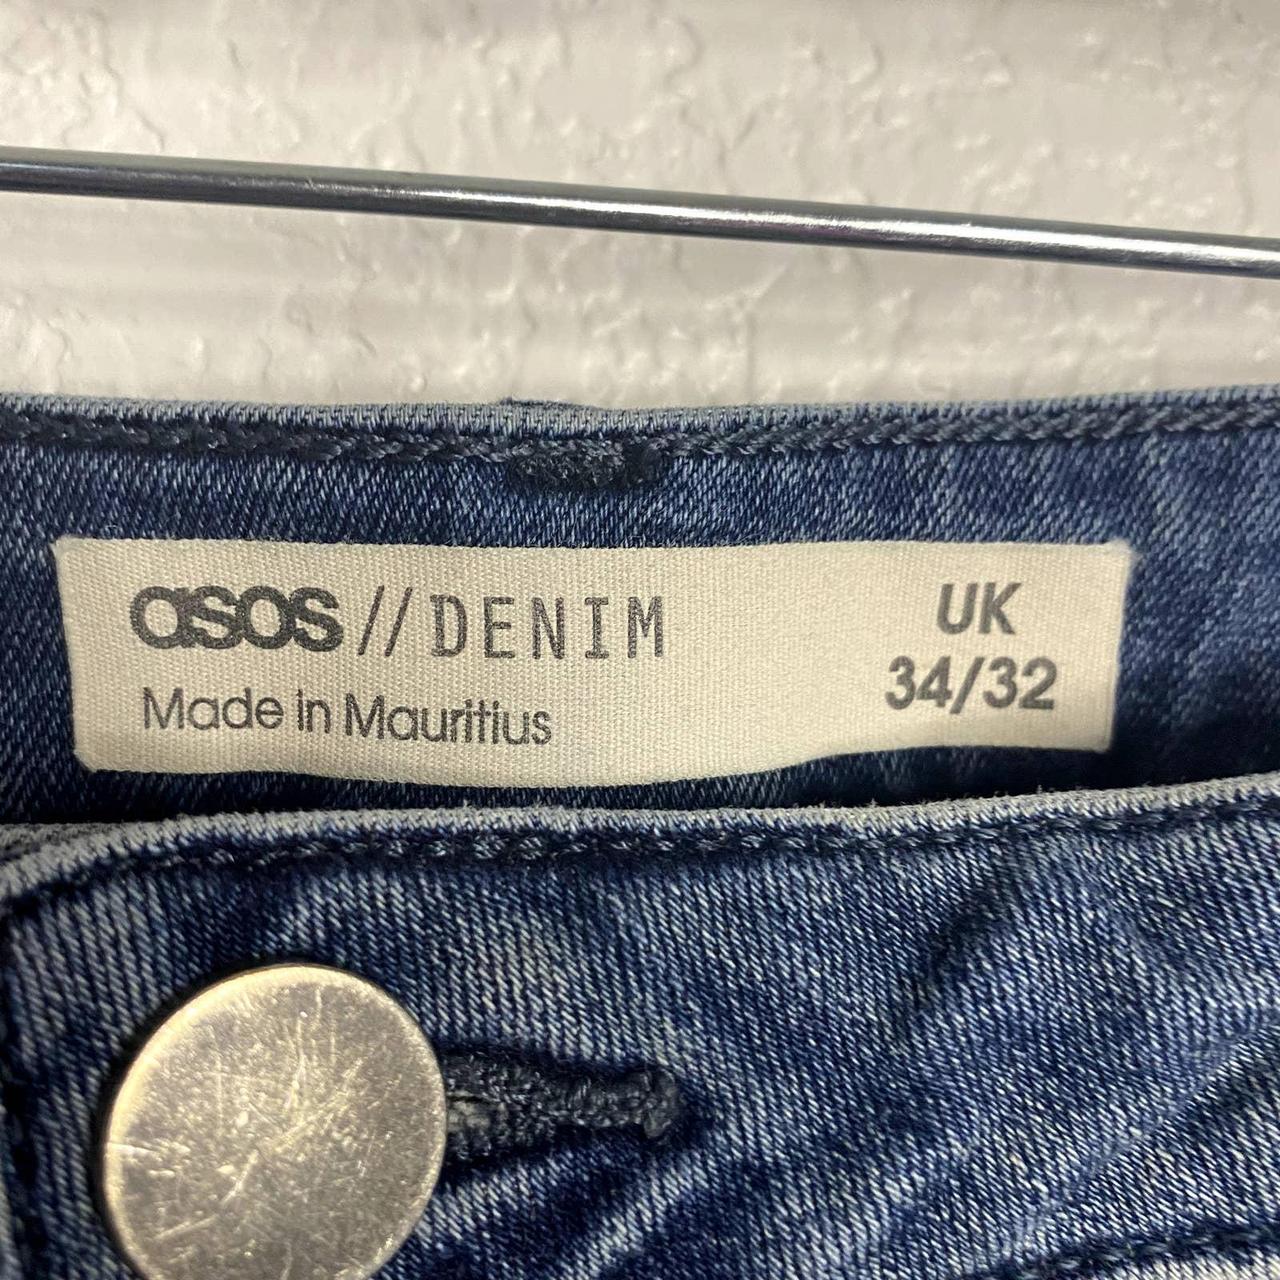 Product Image 3 - ASOS Denim Jeans Size 34